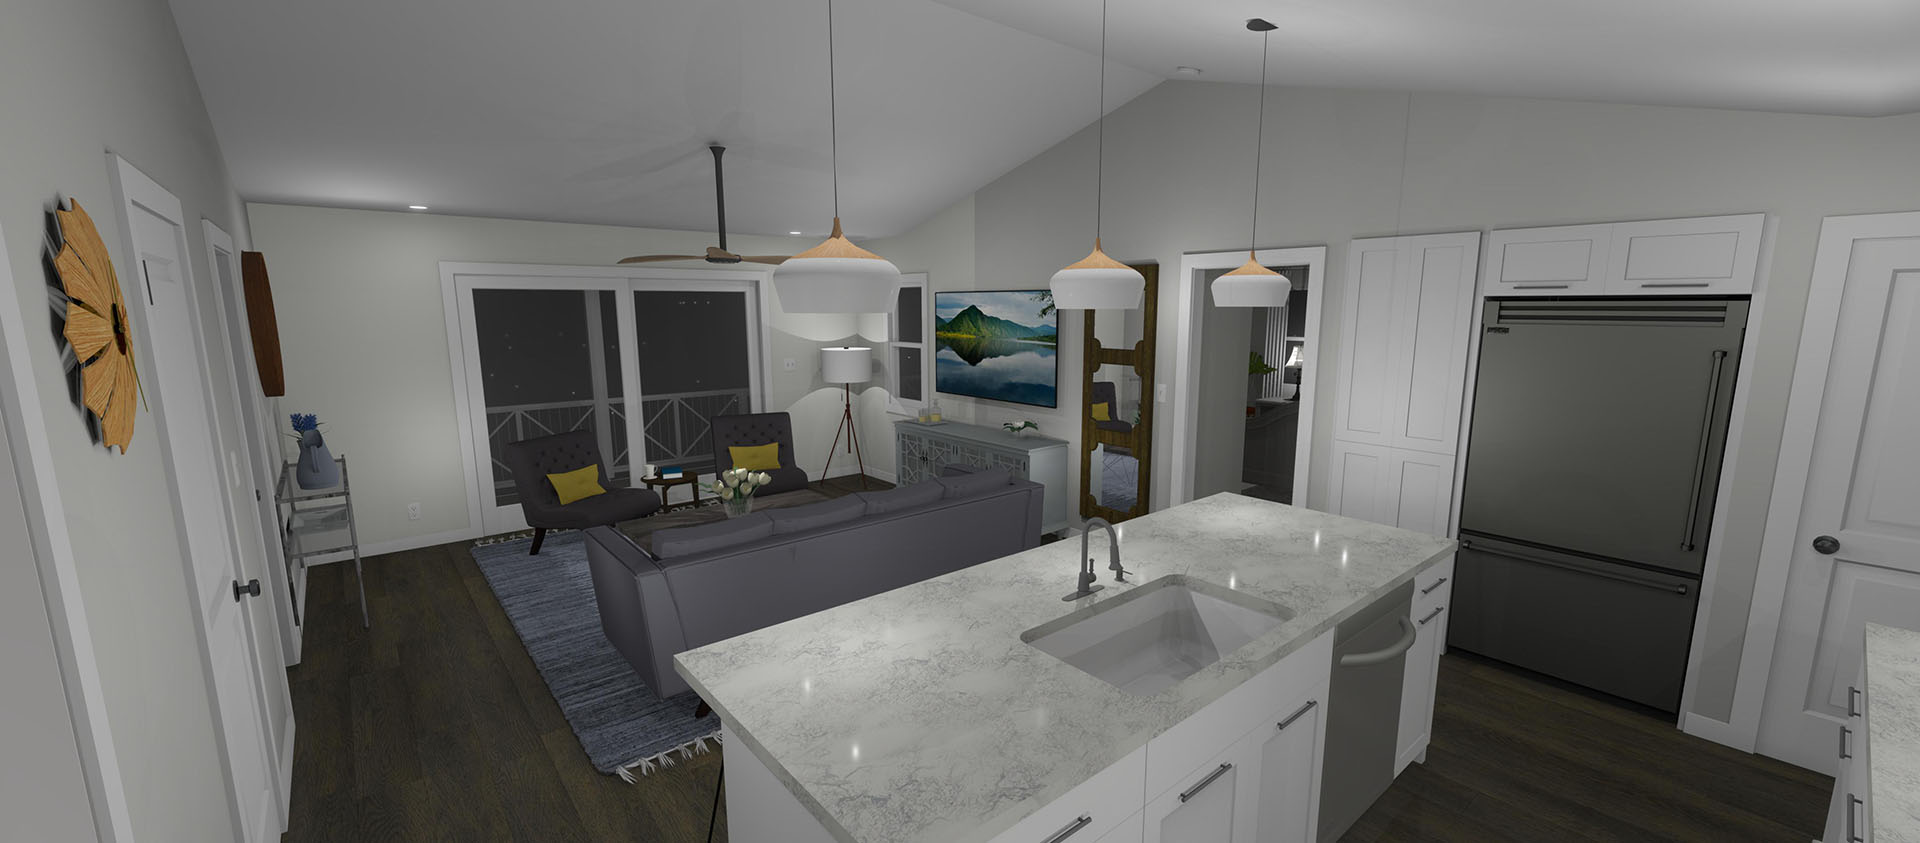 Ohana interior kitchen and living room